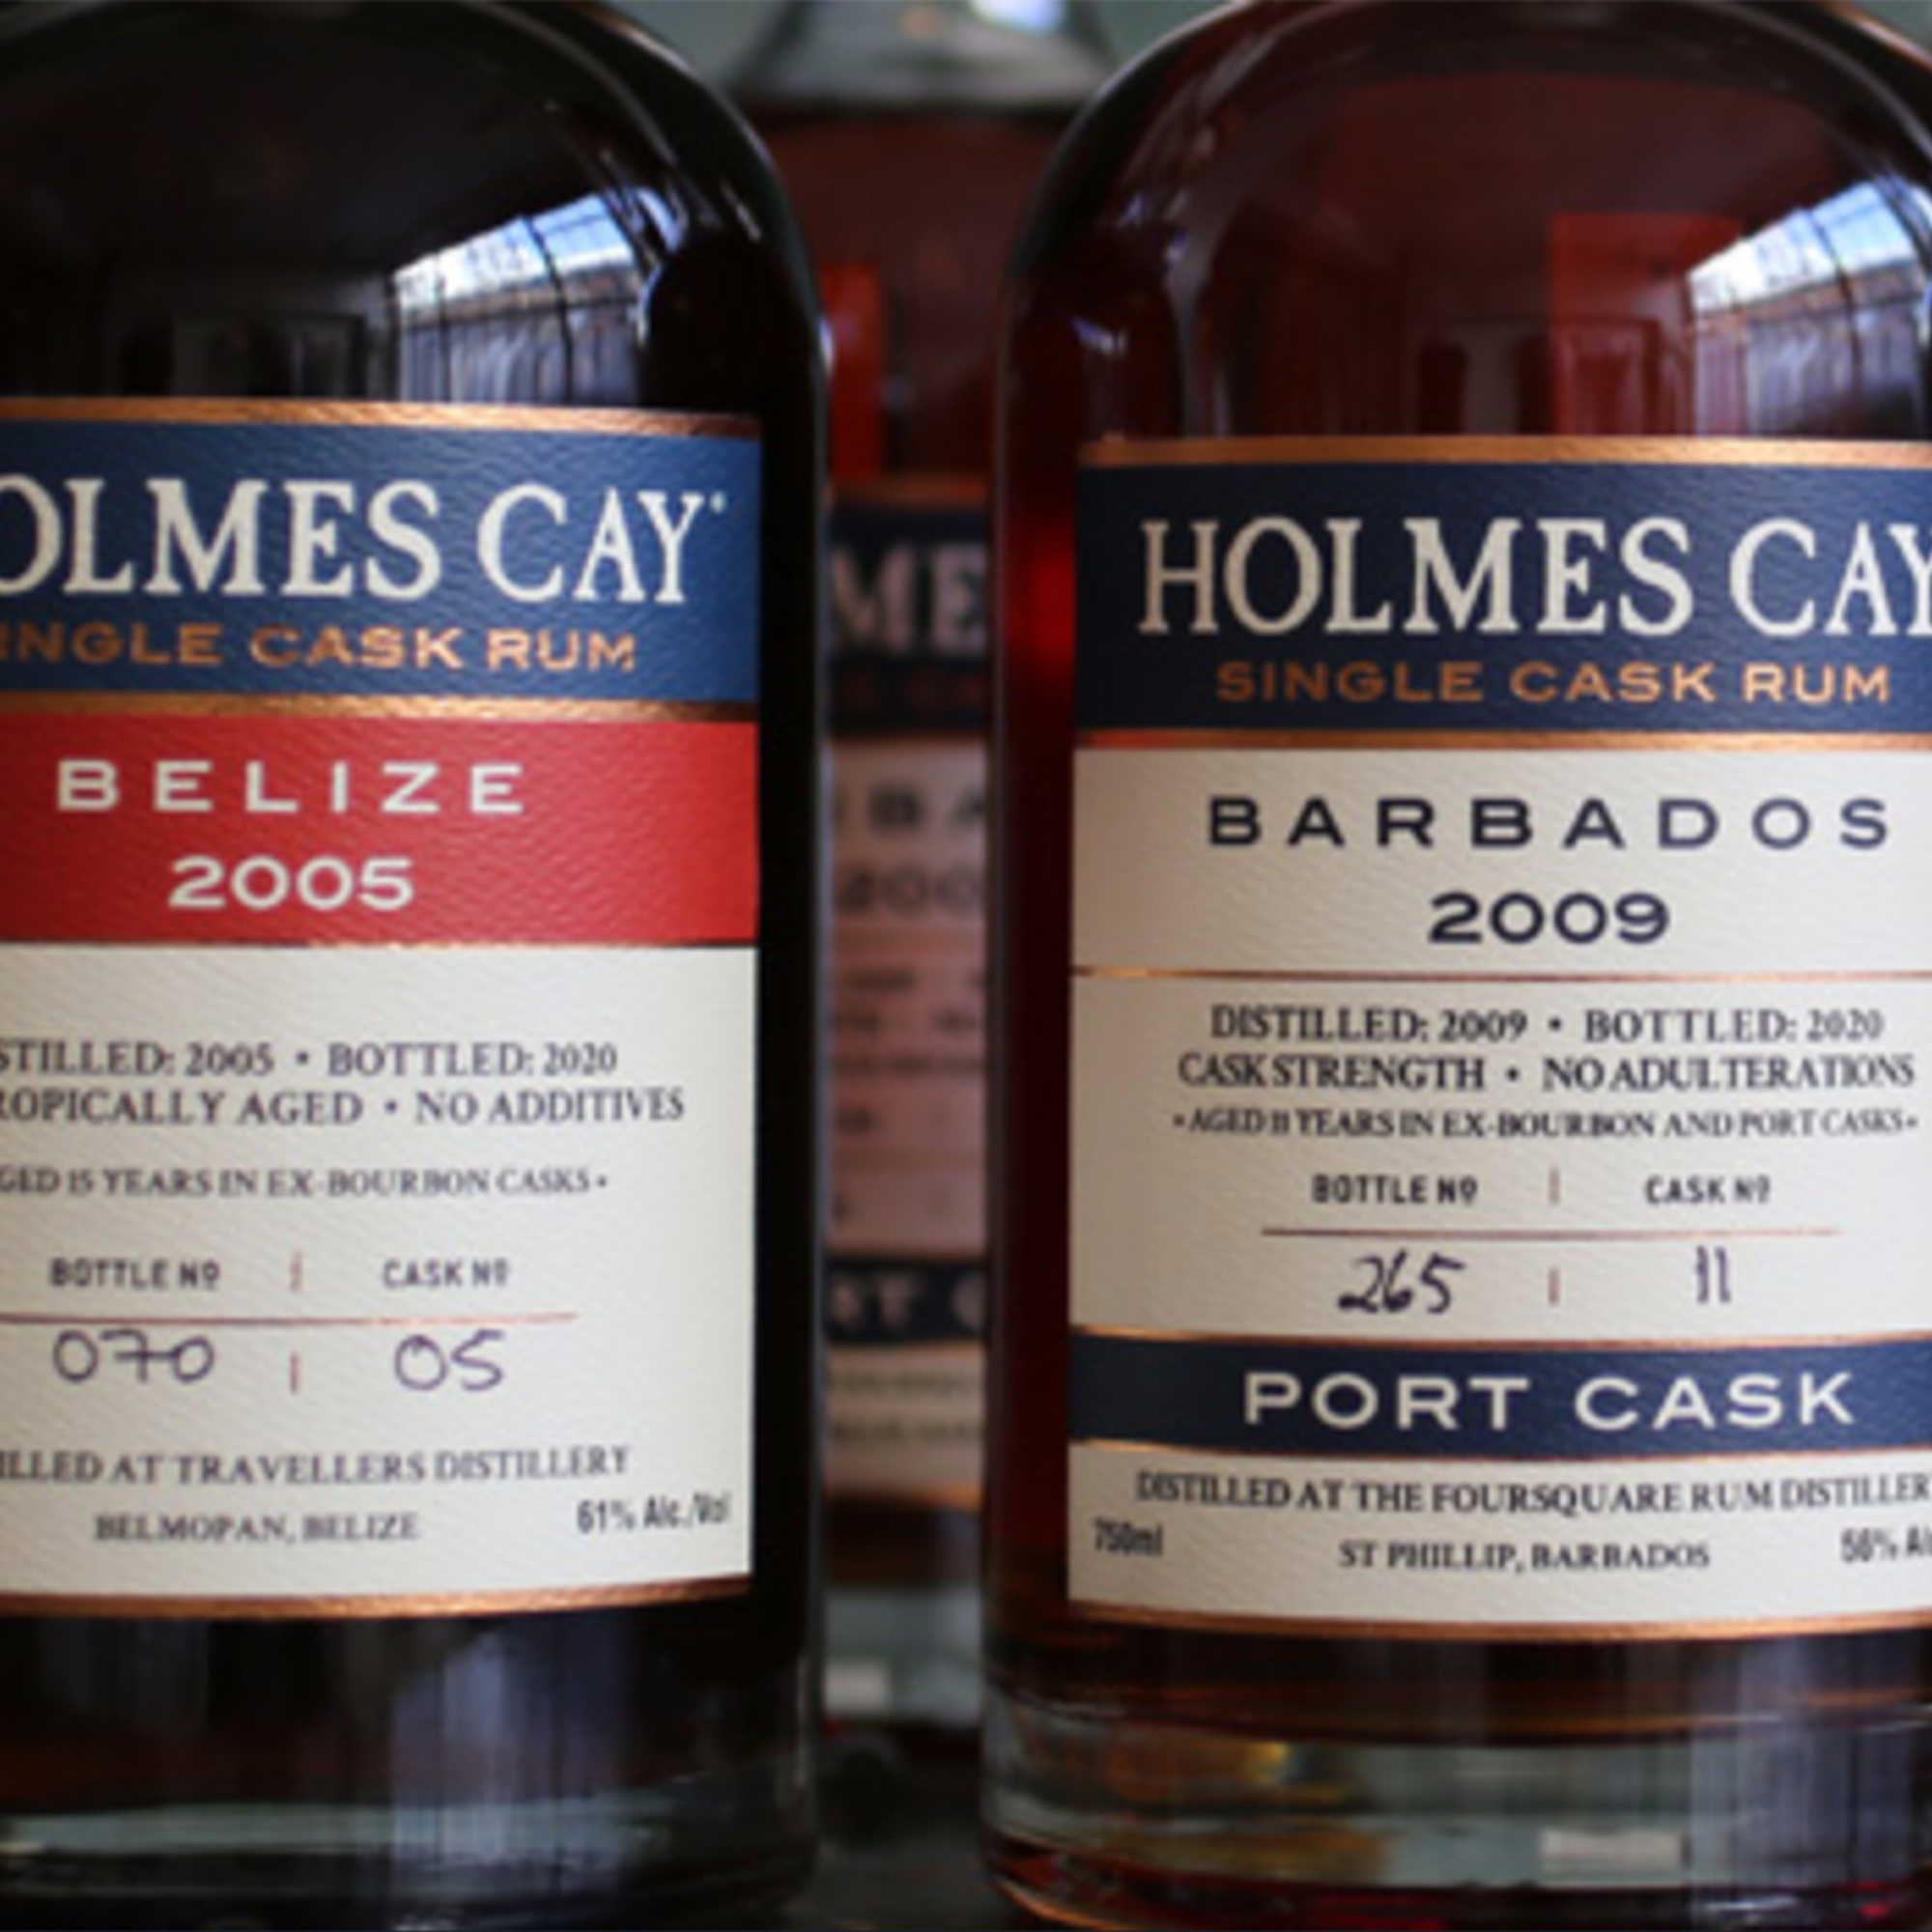 Holmes Cay Single Cask Jamaica ITP Rum